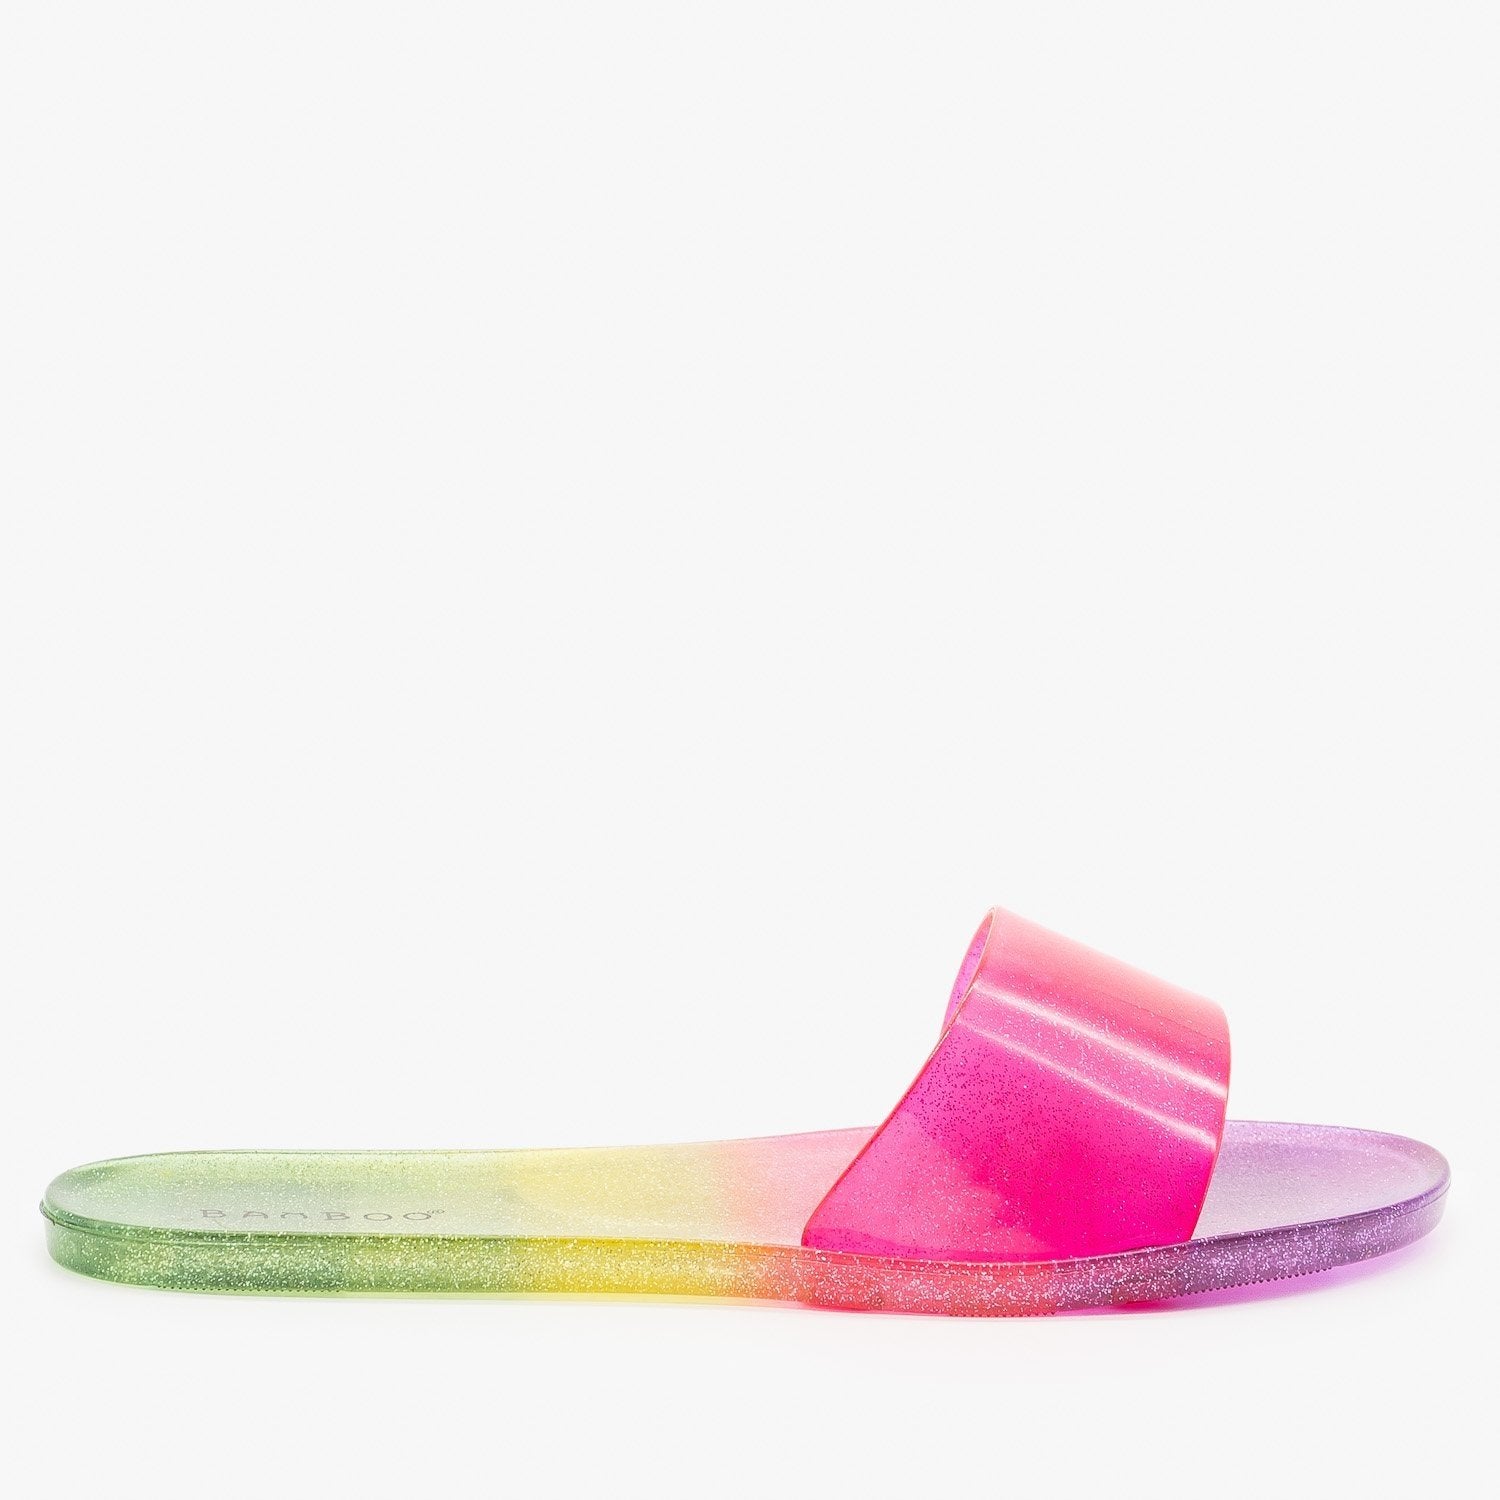 rainbow jelly shoes